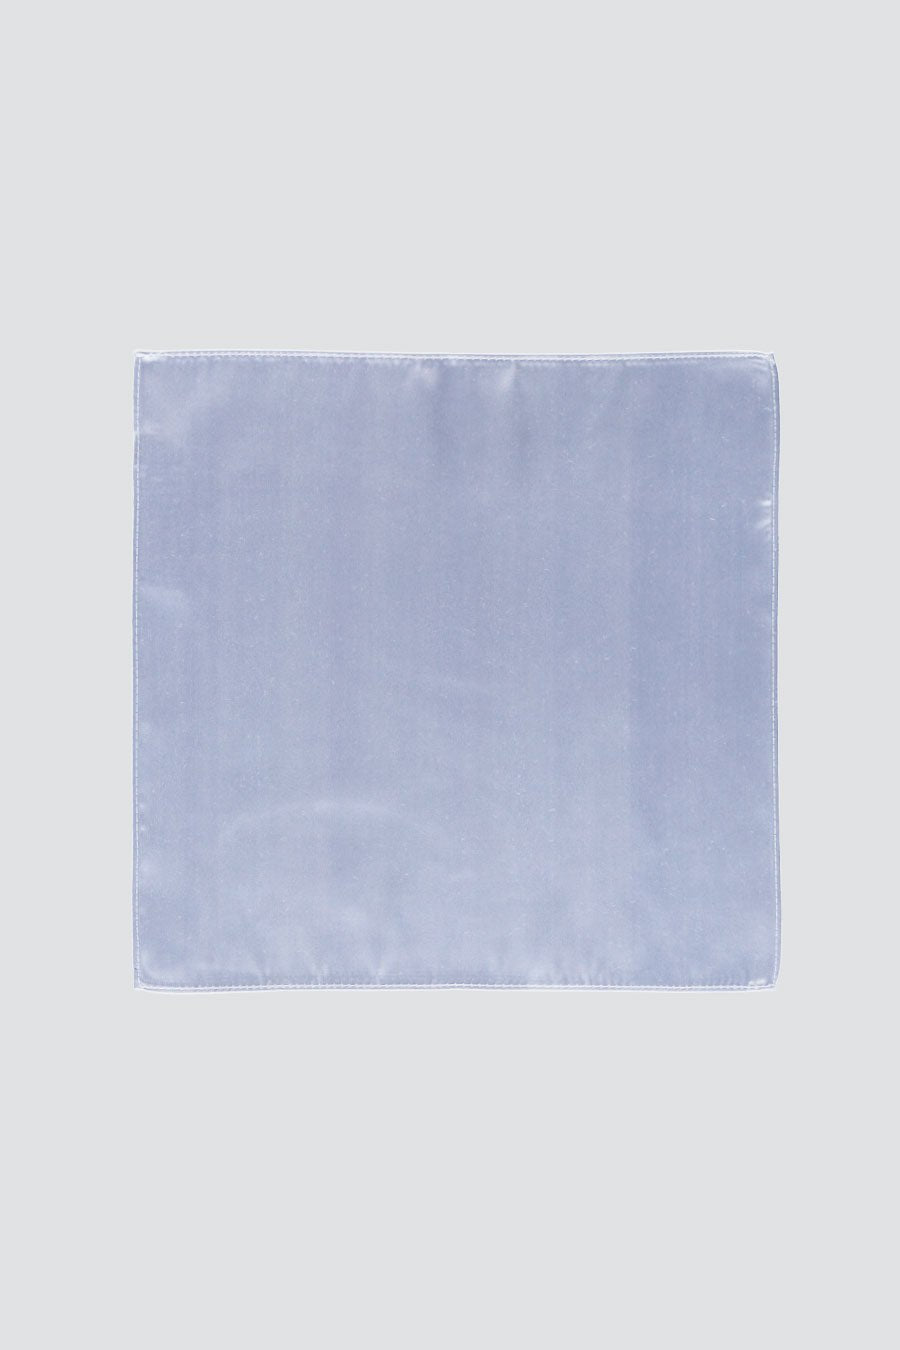 Pocket Square - 100% Silk - Cloud Blue - Maids to Measure